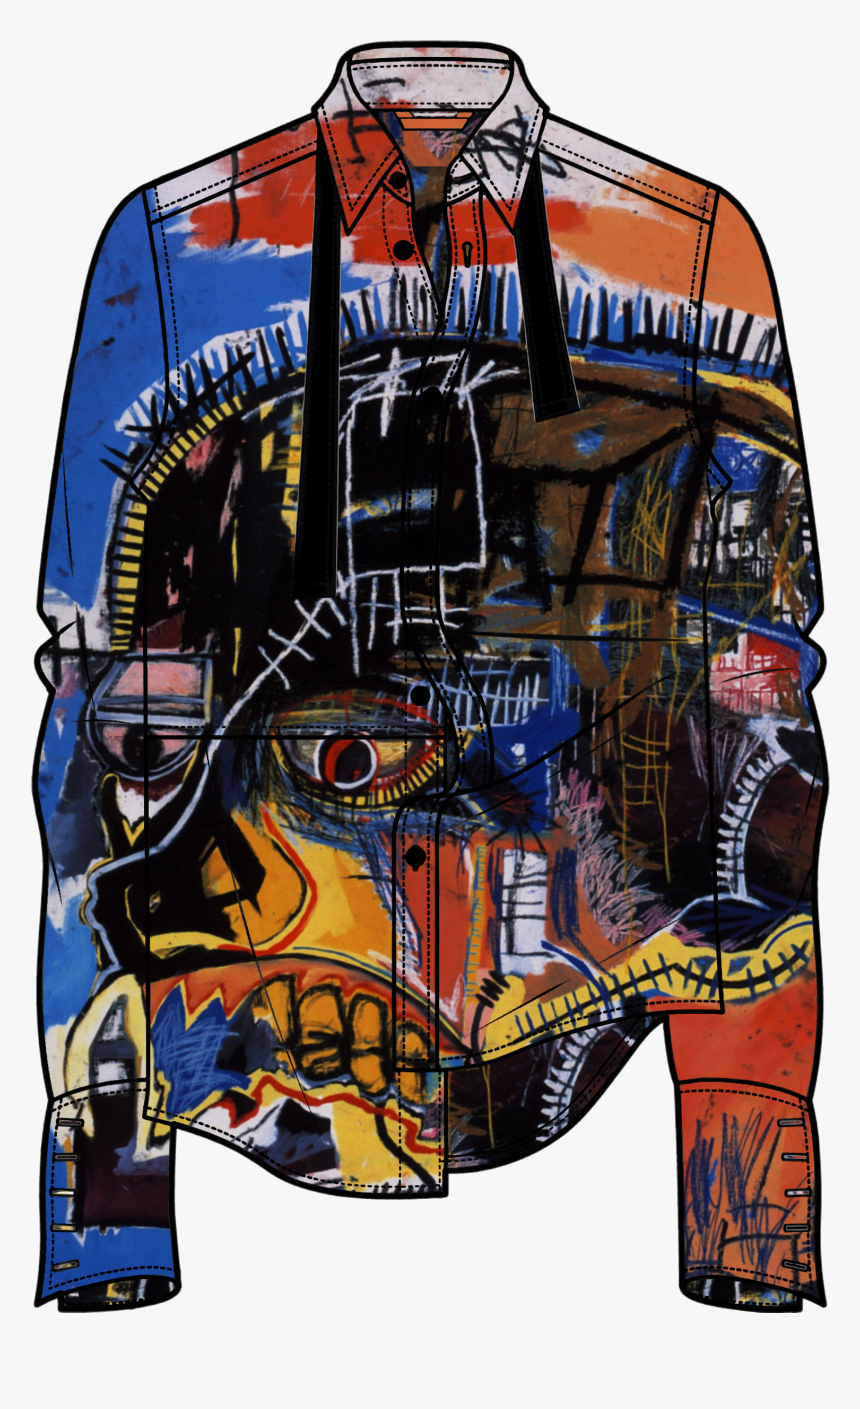 Basquiat Crown Logo - Basquiat Children's Book, HD Png Download, Free Download